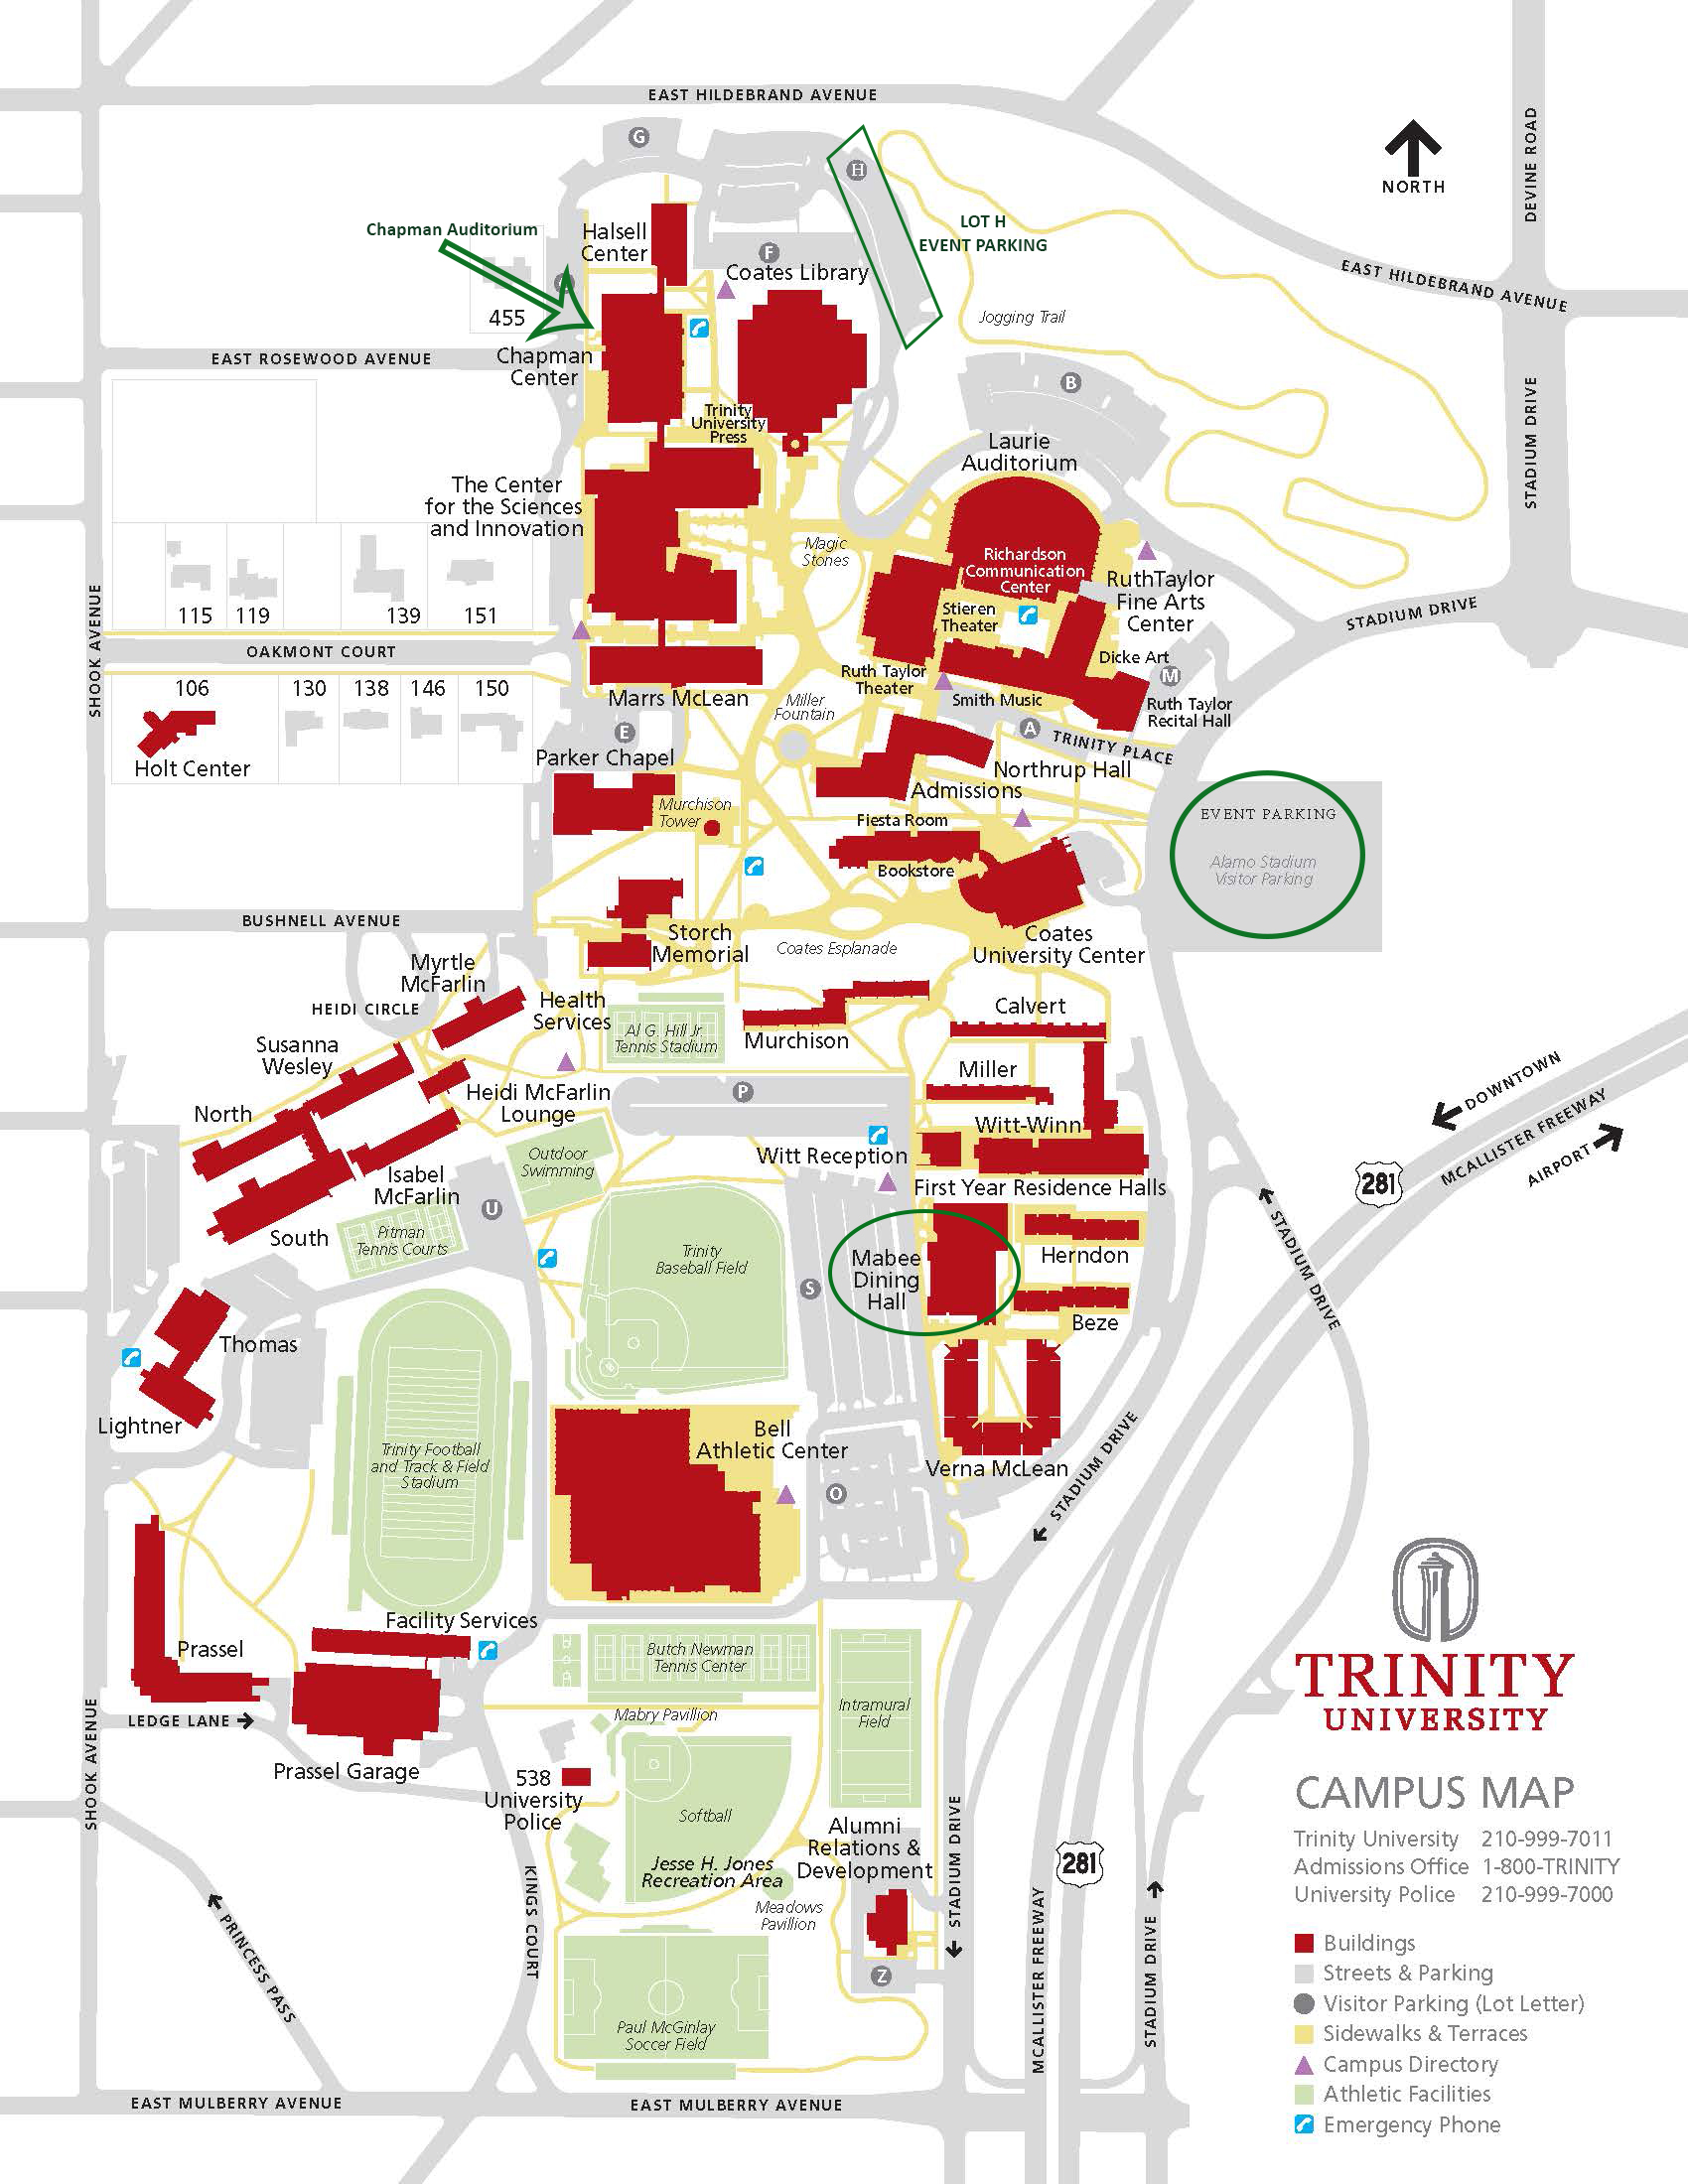 Trinity University Campus Map - Wynne Karlotte